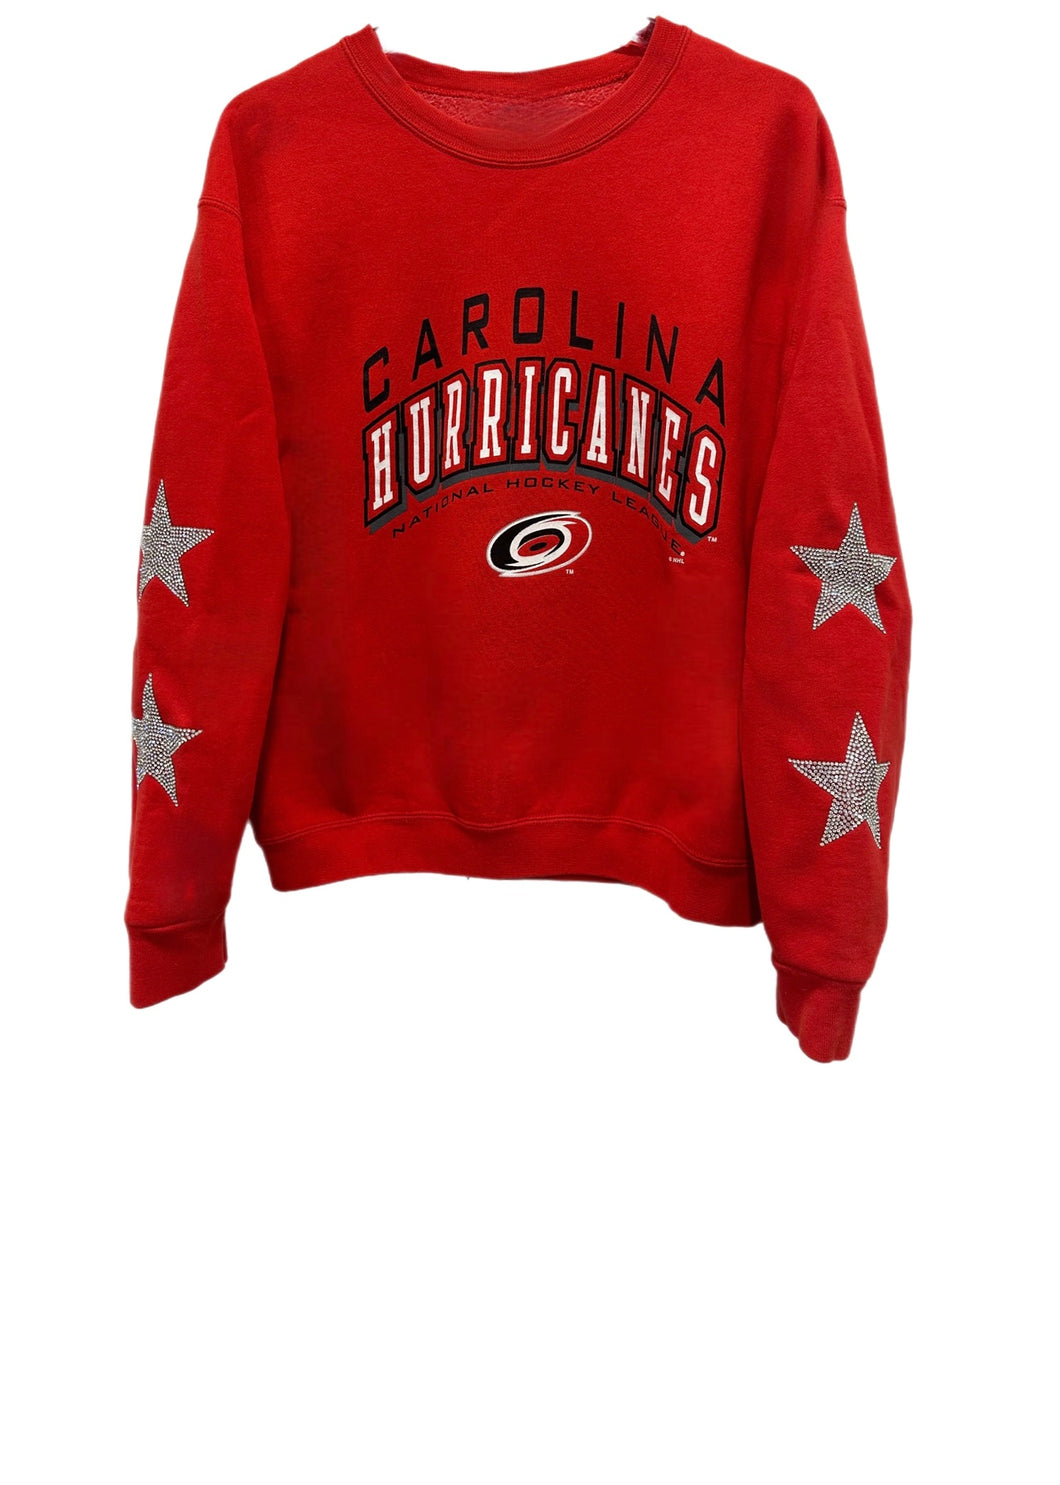 Carolina Hurricanes, NHL One of a KIND Vintage Sweatshirt with Crystal Stars Design